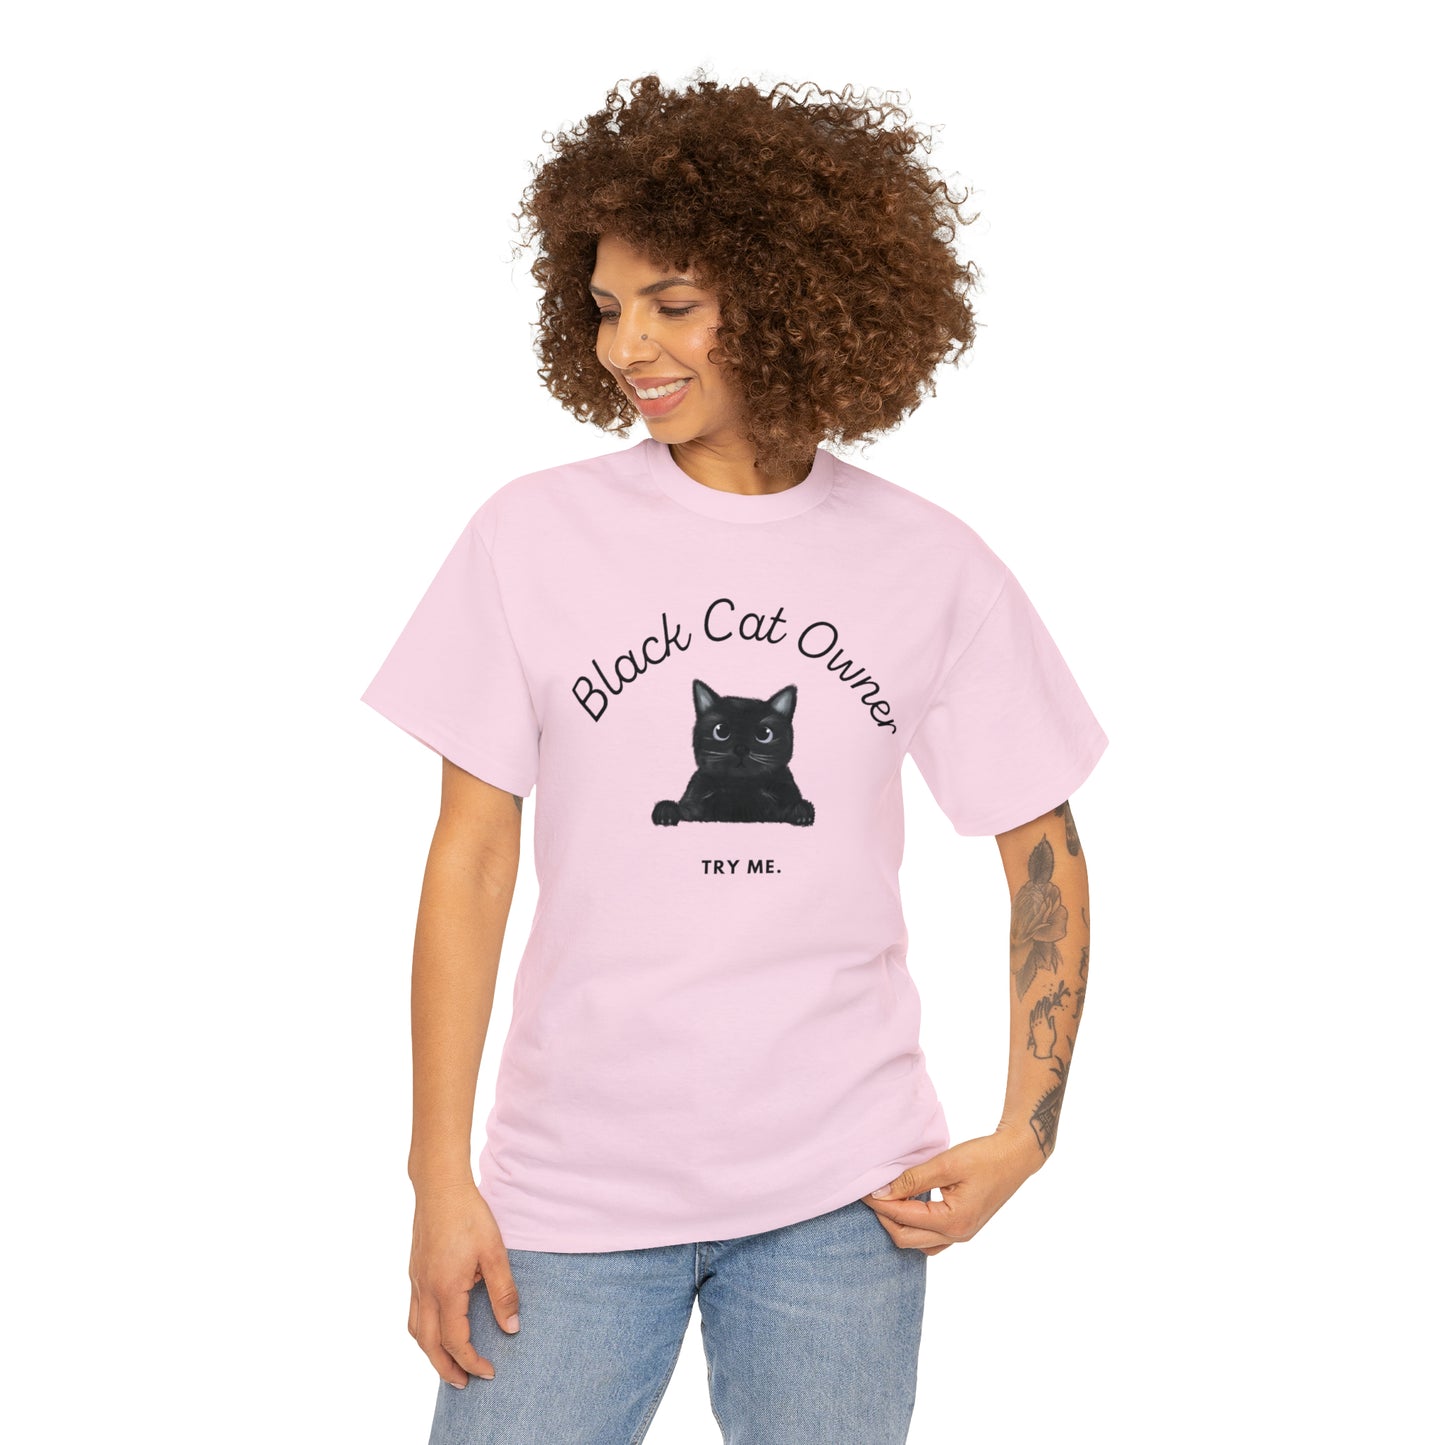 Black Cat Owner T-shirt, Black Cat T-shirt